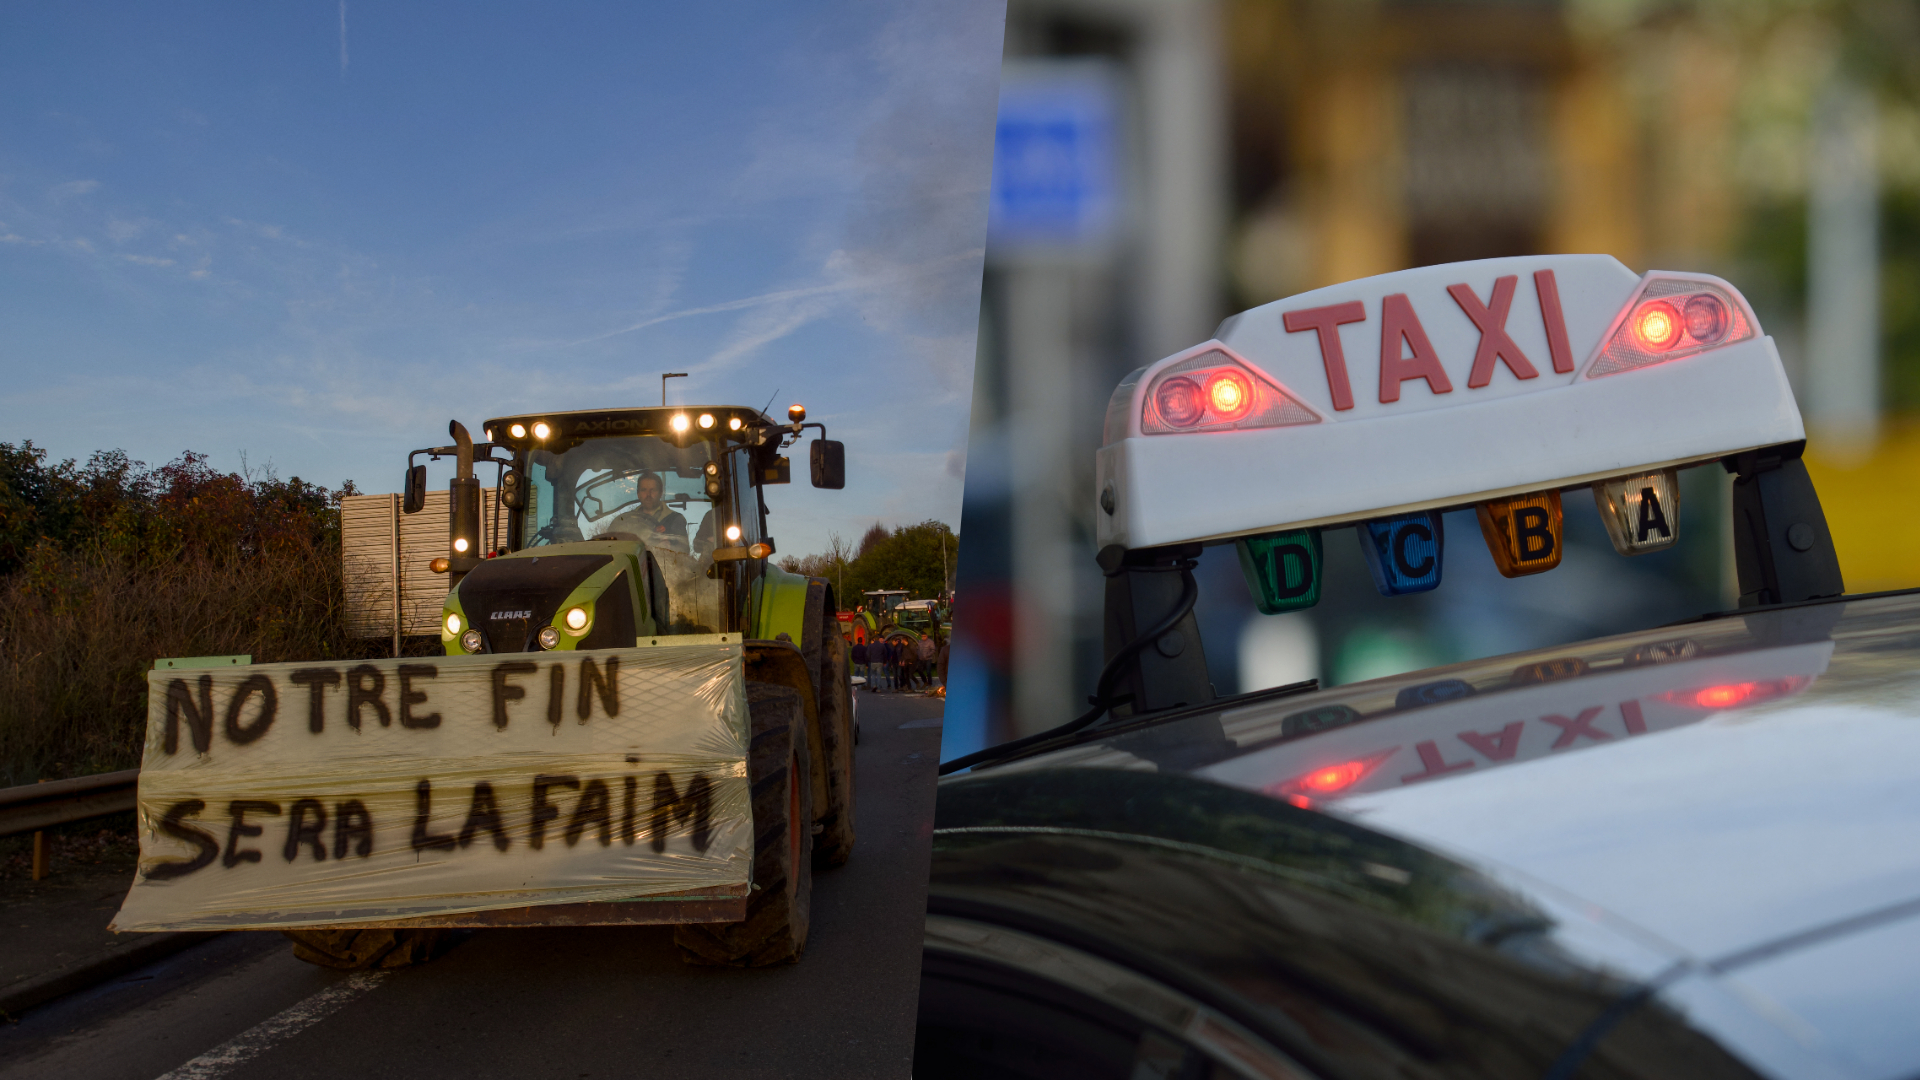 Carnets de factures taxi - Carnets transports sanitaires et taxis